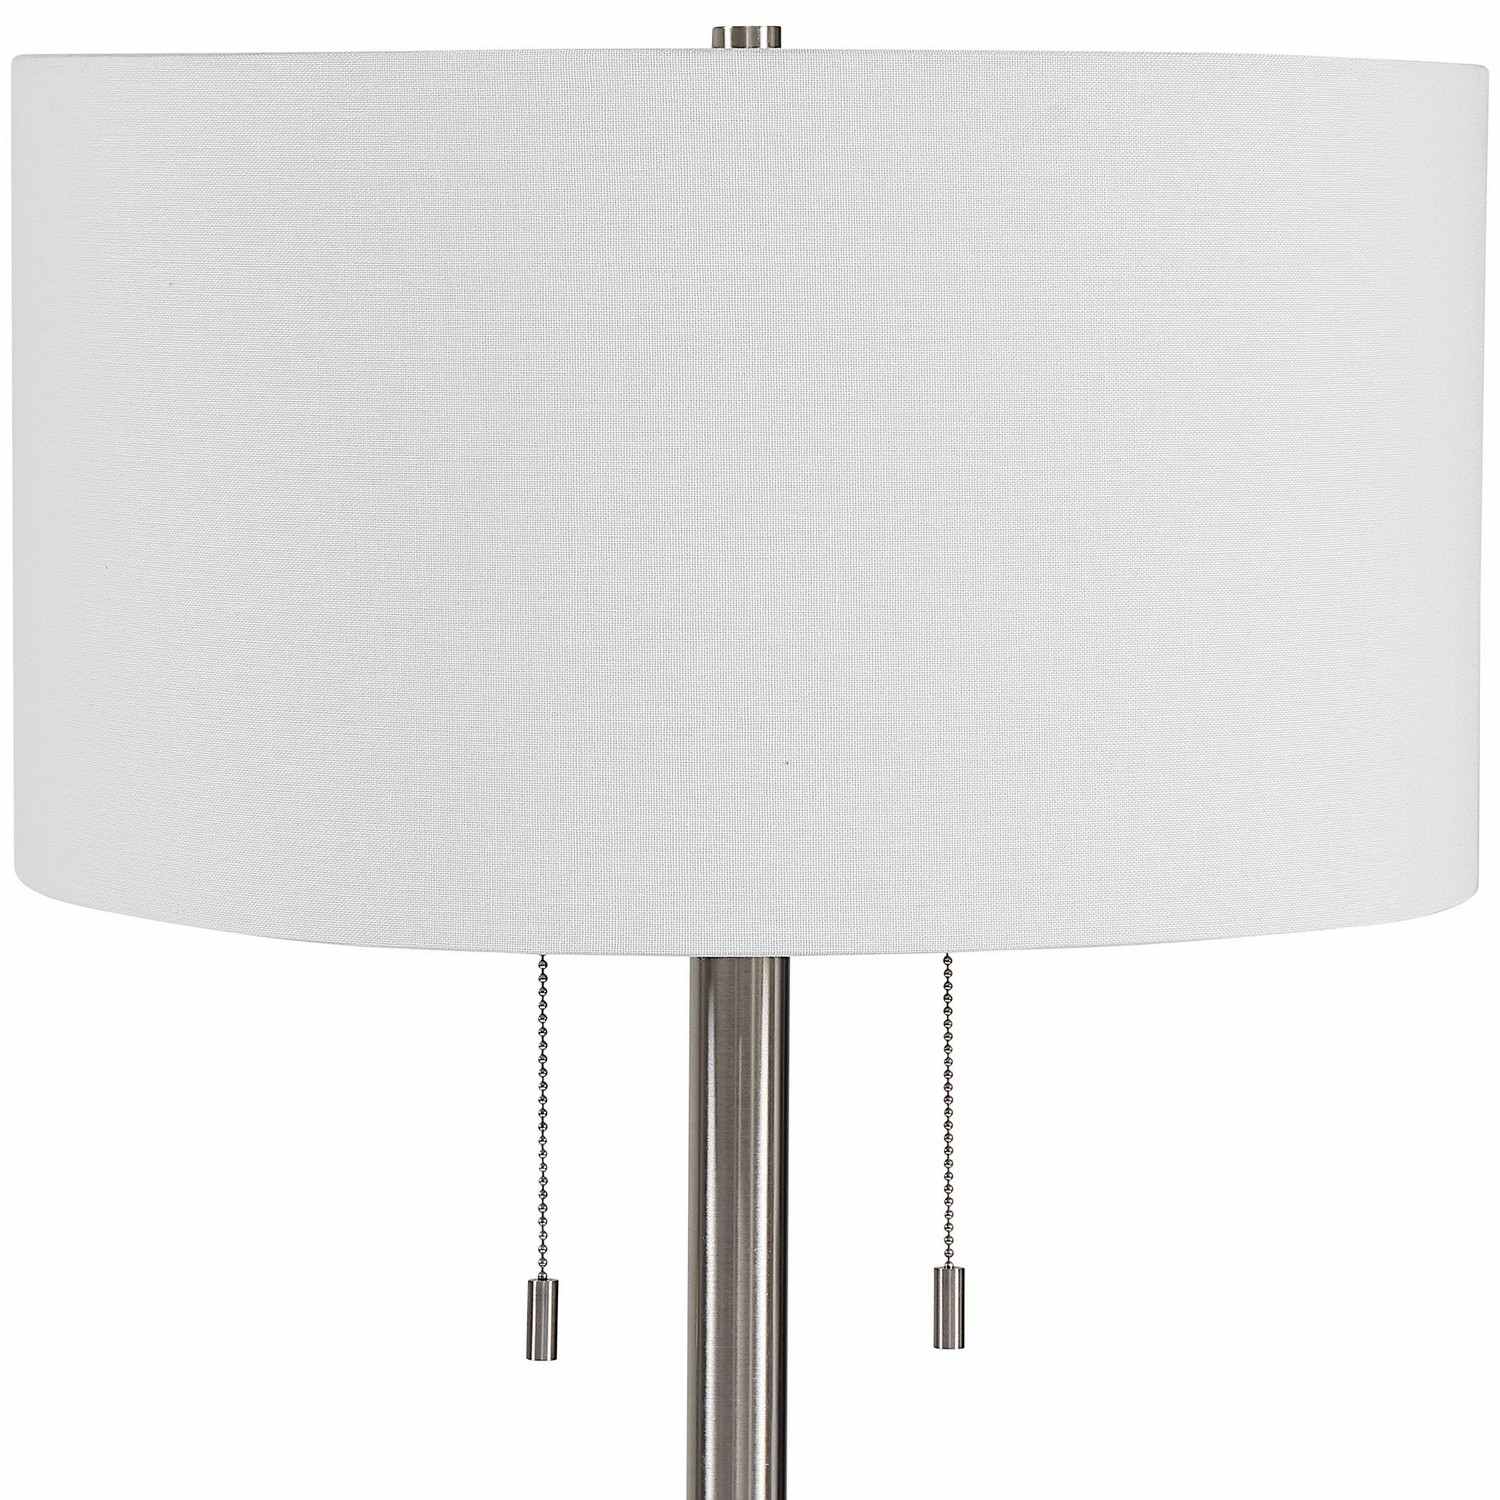 Uttermost W26082-1 Floor Lamp - Brushed Nickel